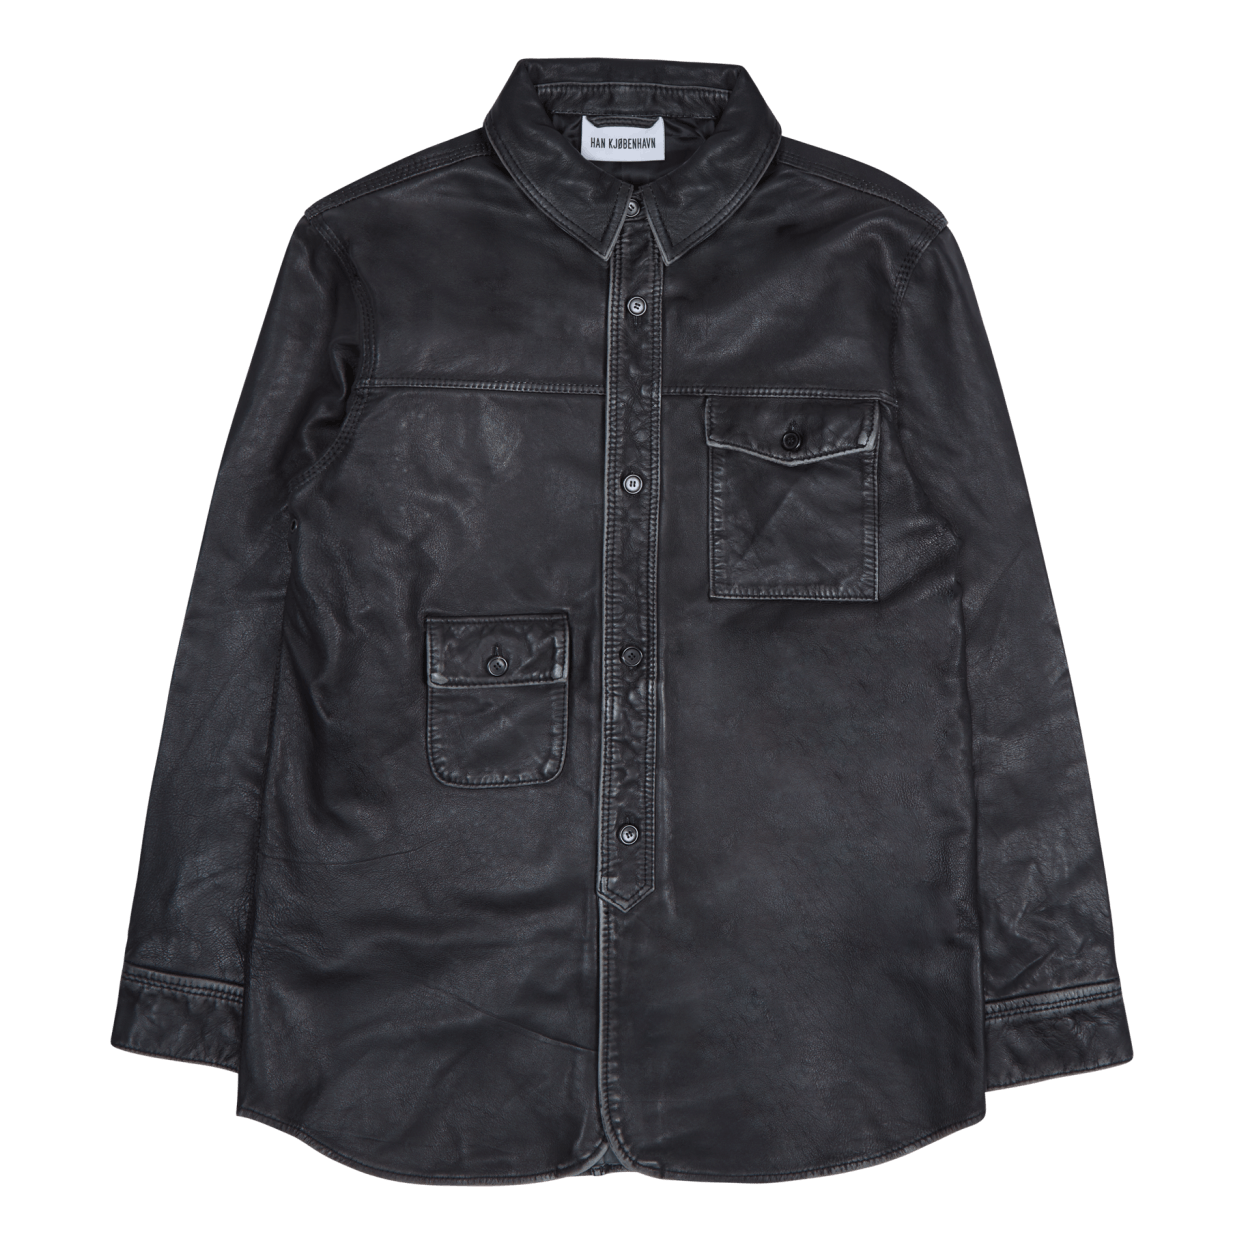 Army Shirt Black Leather